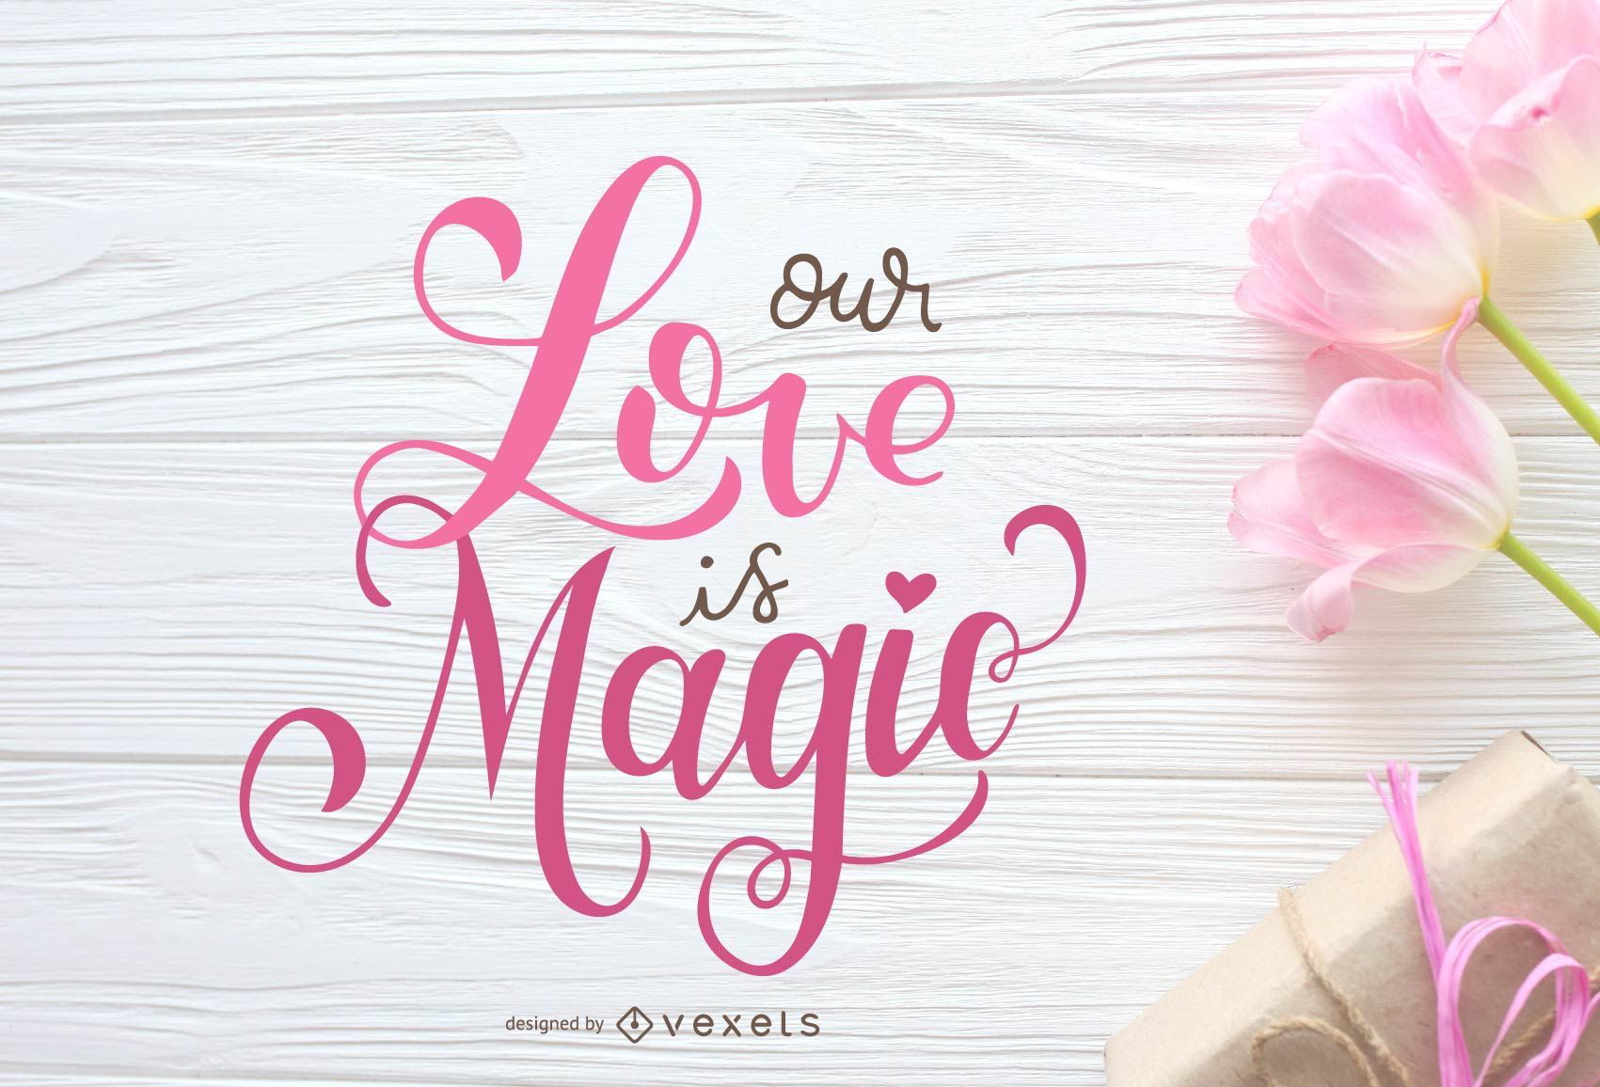 Unsere Liebe ist Magic Lettering Design